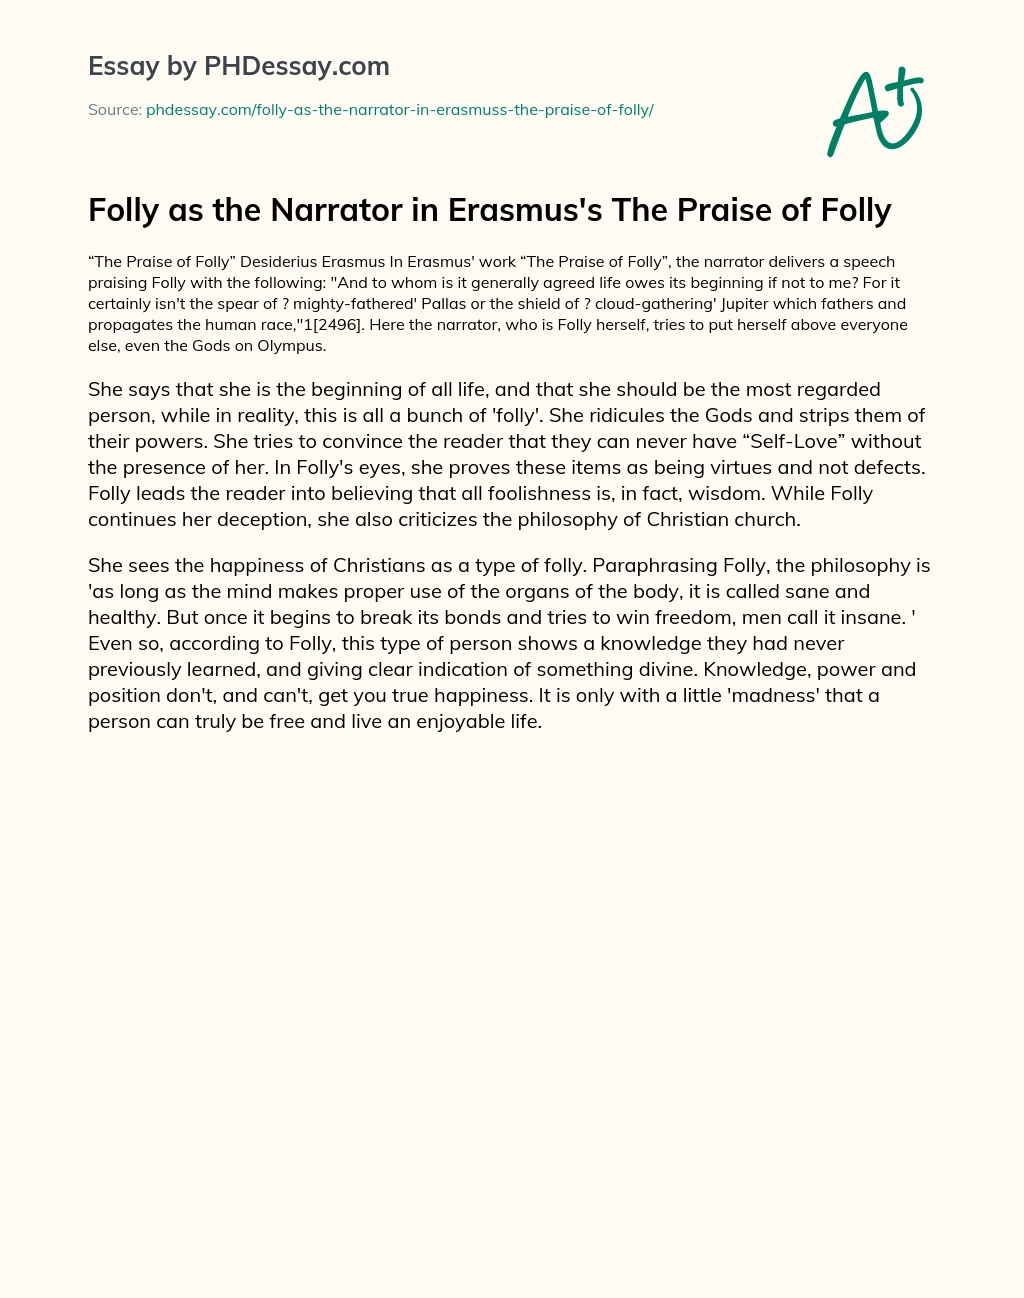 Folly as the Narrator in Erasmus’s The Praise of Folly essay